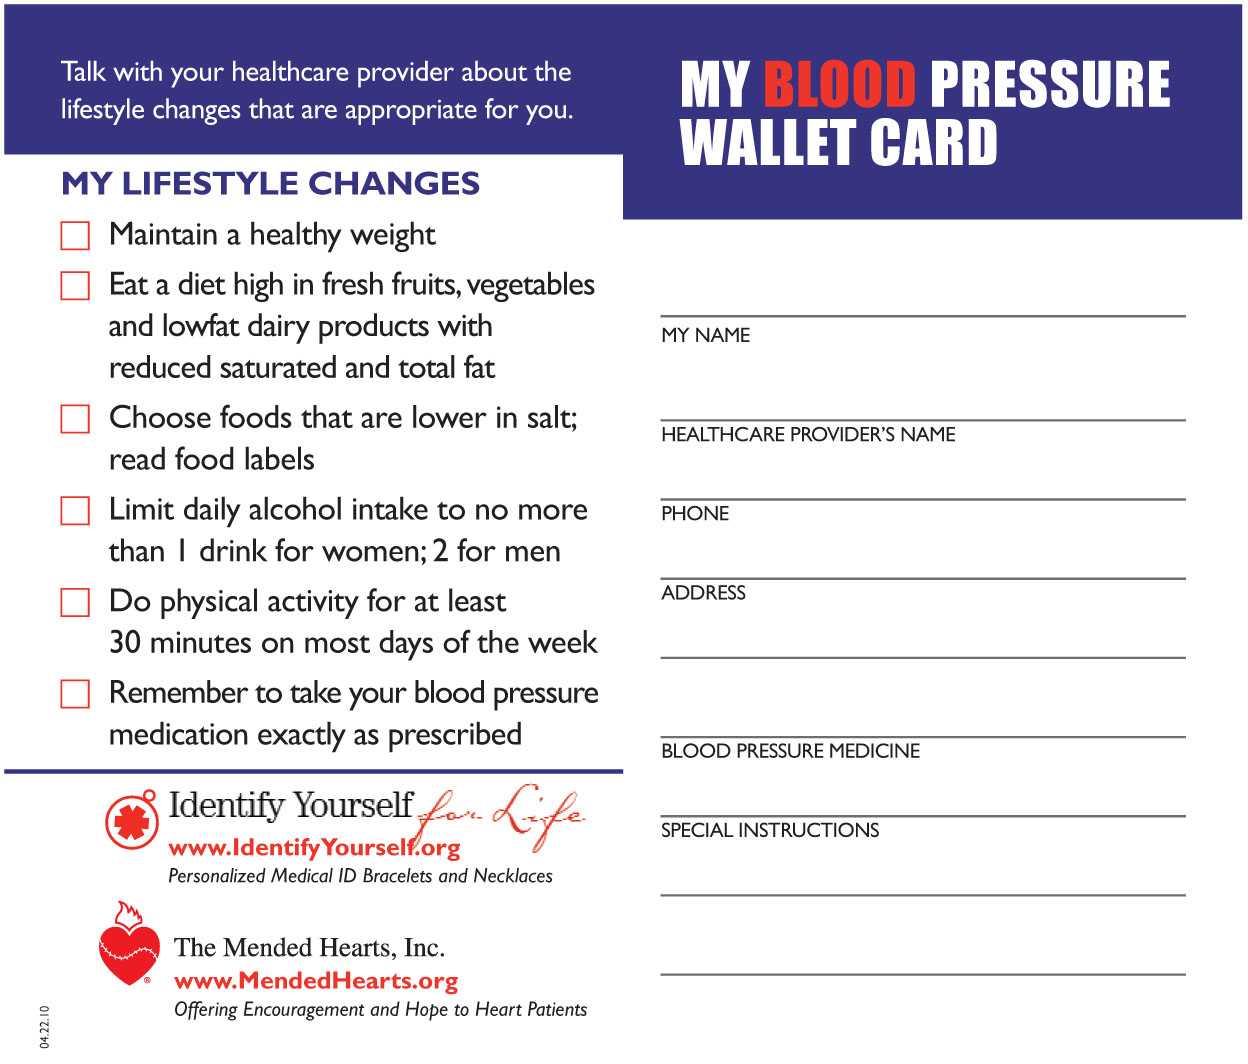 Printable Wallet Medication Card | The Art Of Mike Mignola Inside Medical Alert Wallet Card Template